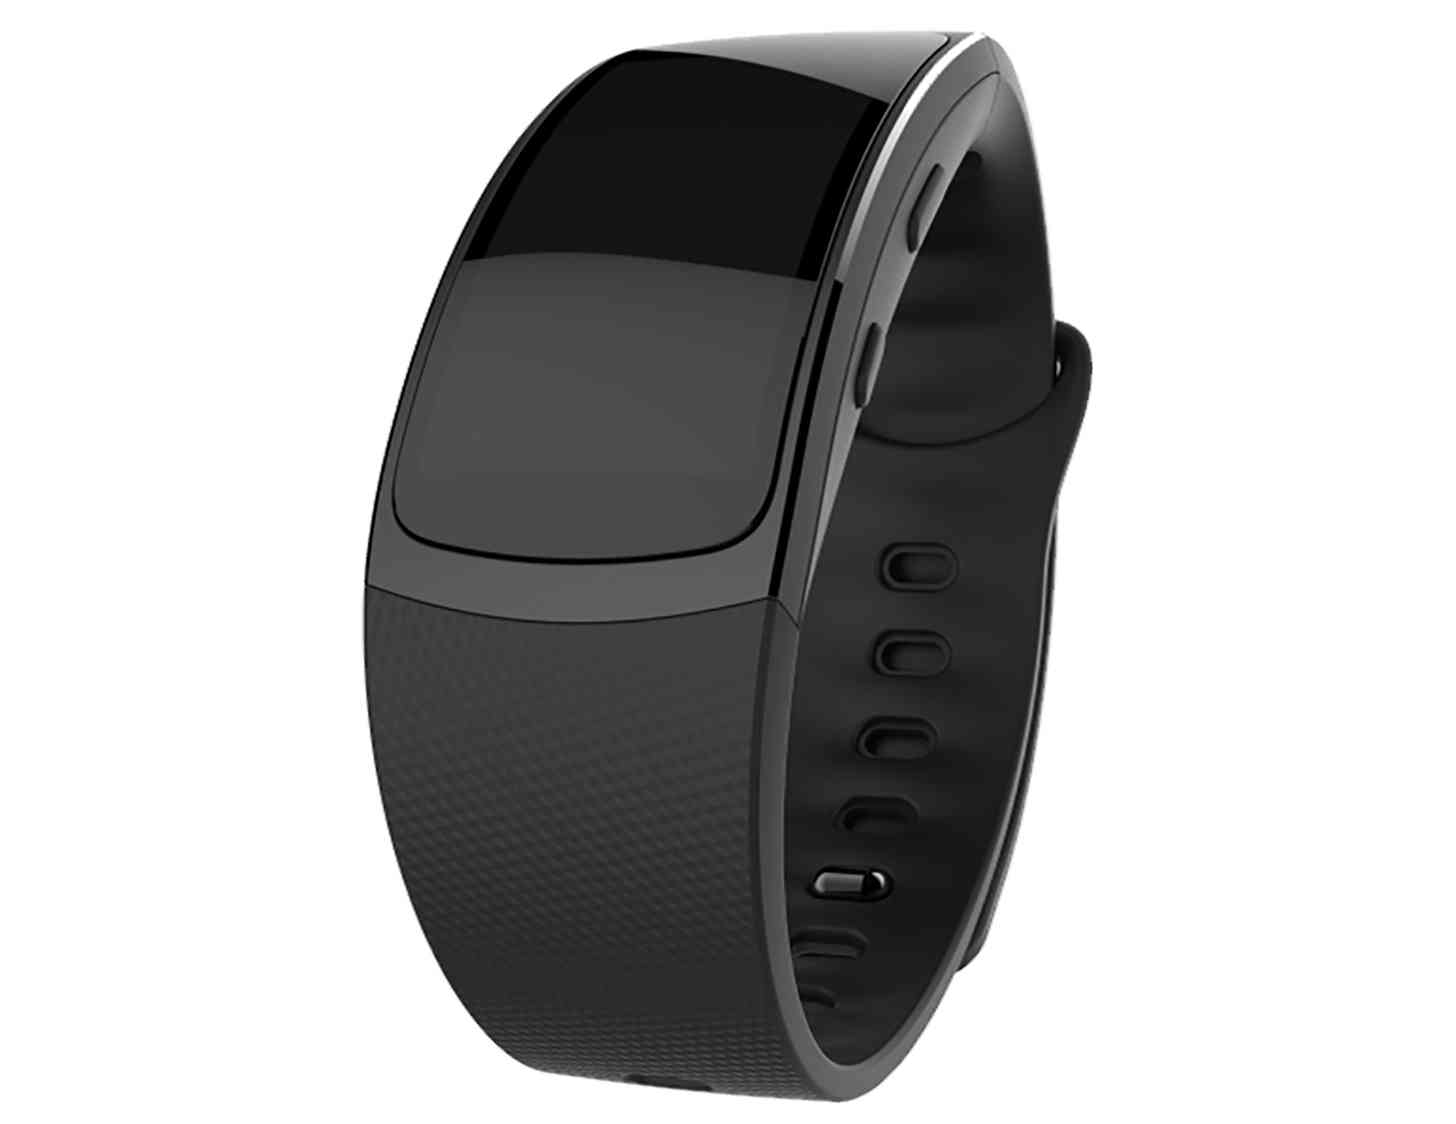 Samsung Gear Fit 2 fitness tracker